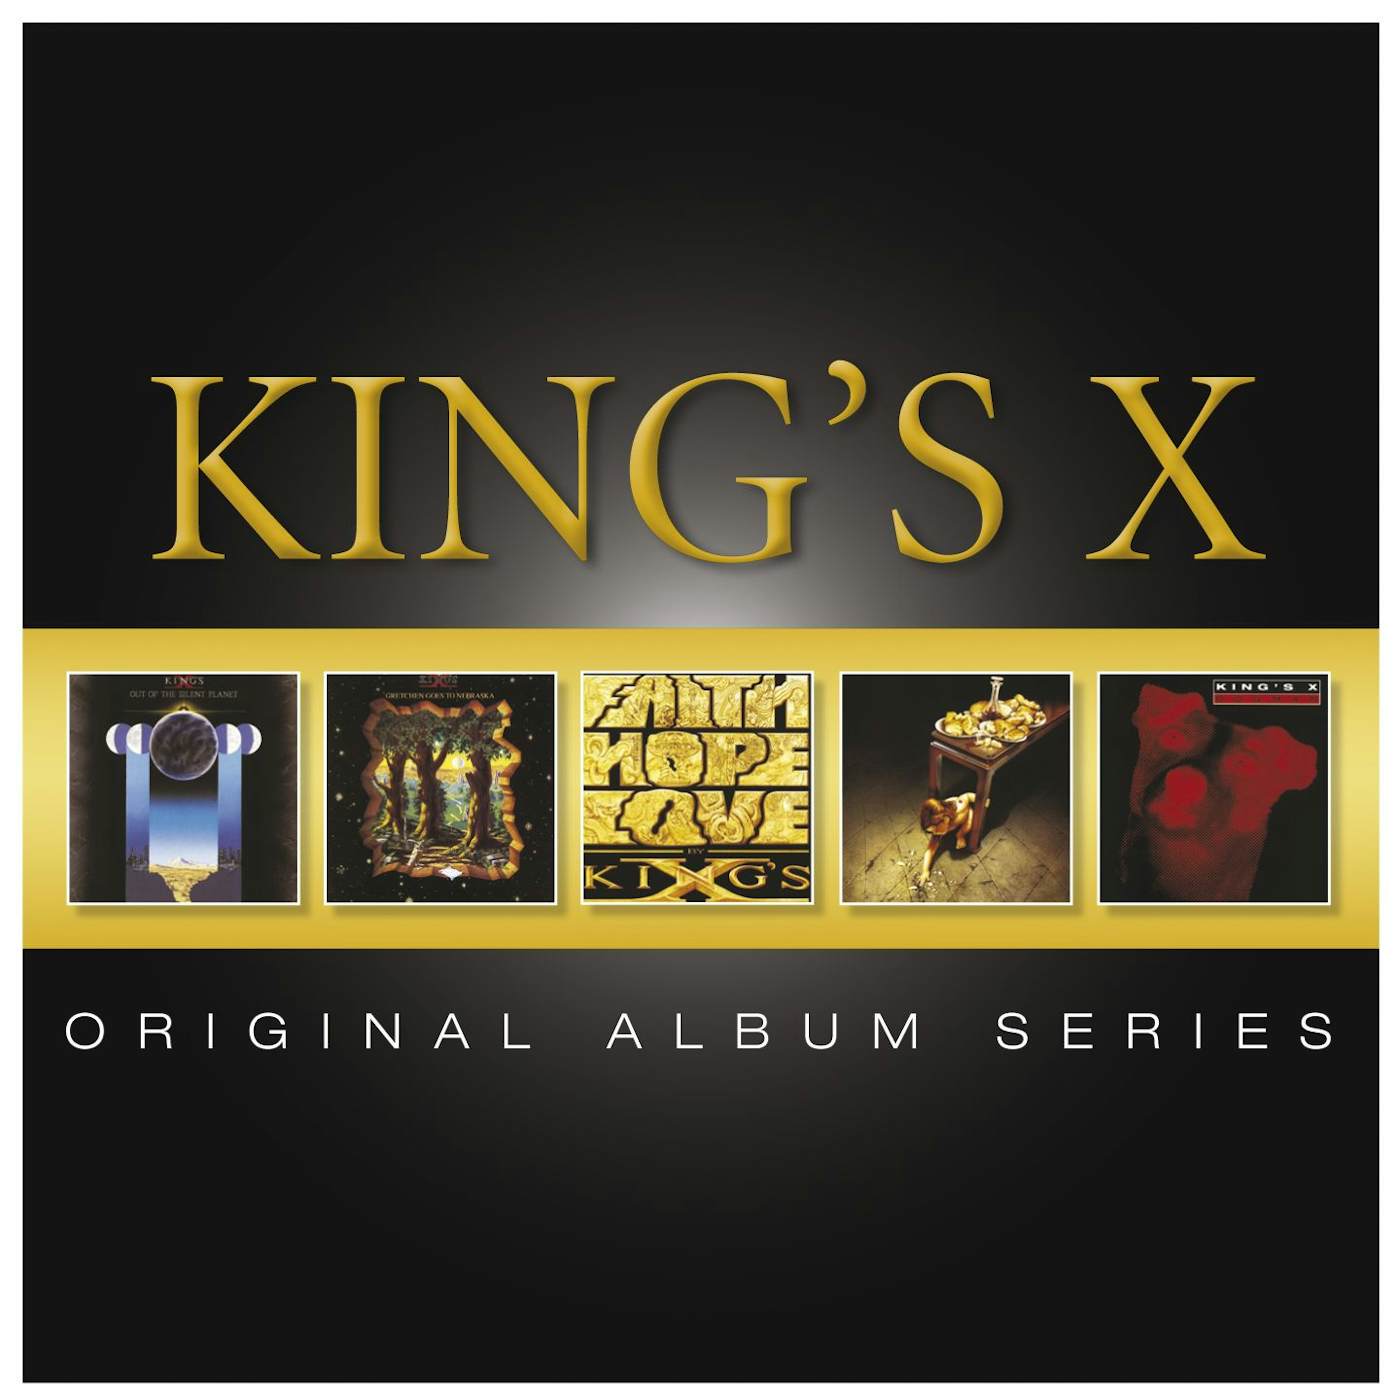 King's X Original Album Series (5 CD) Box Set